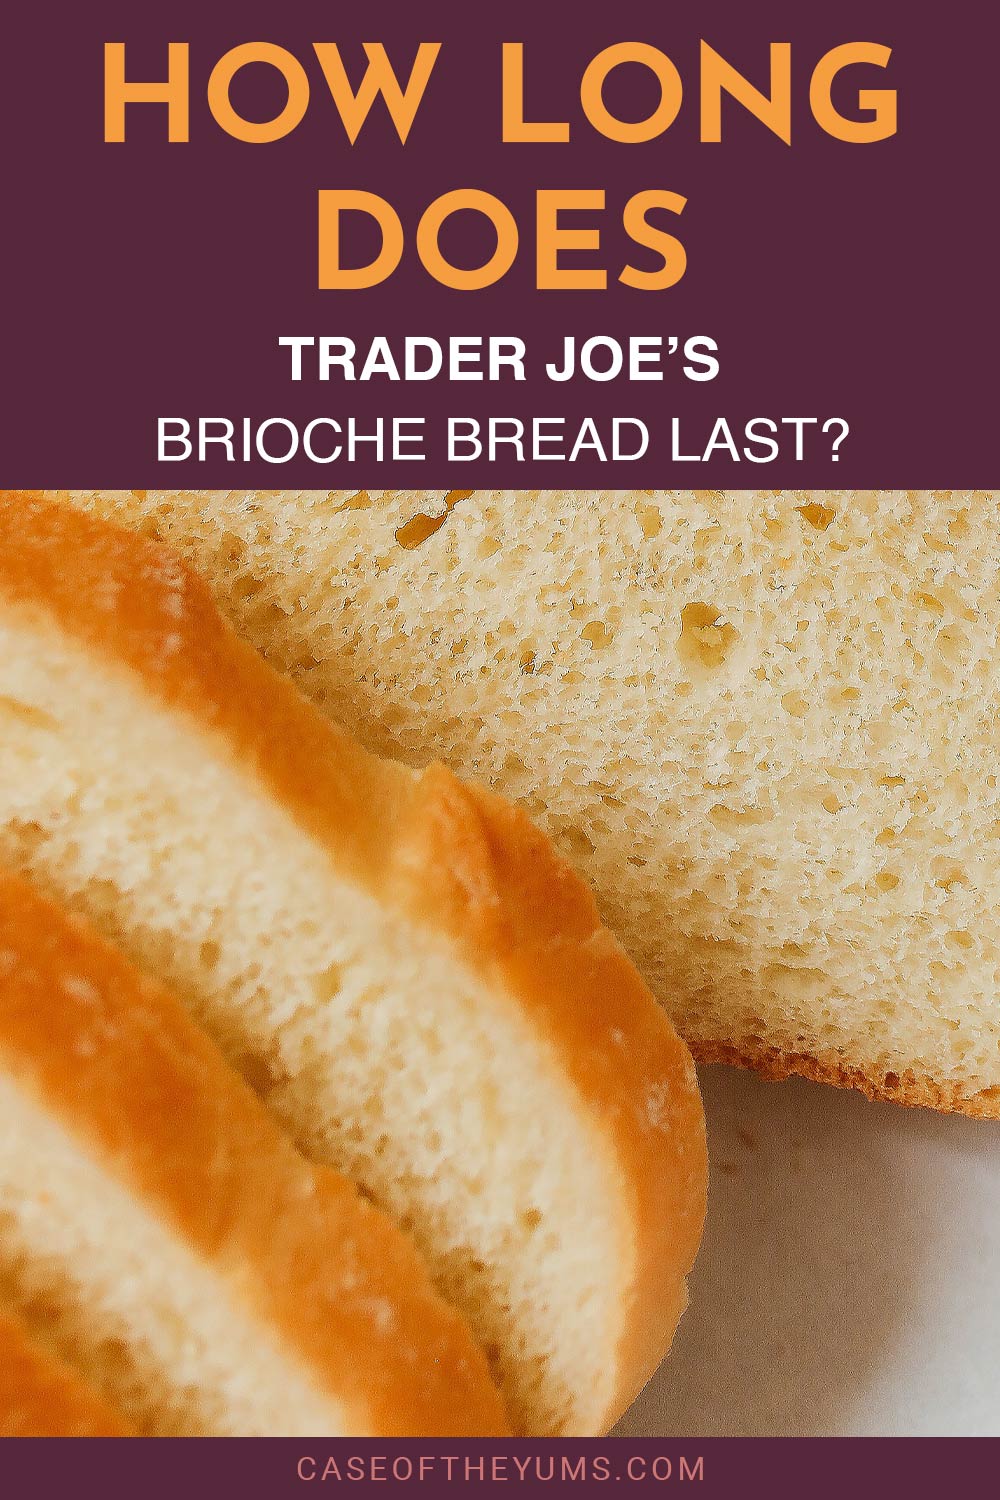 Trader Joe's Brioche Bread slices - How Long Does it Last?